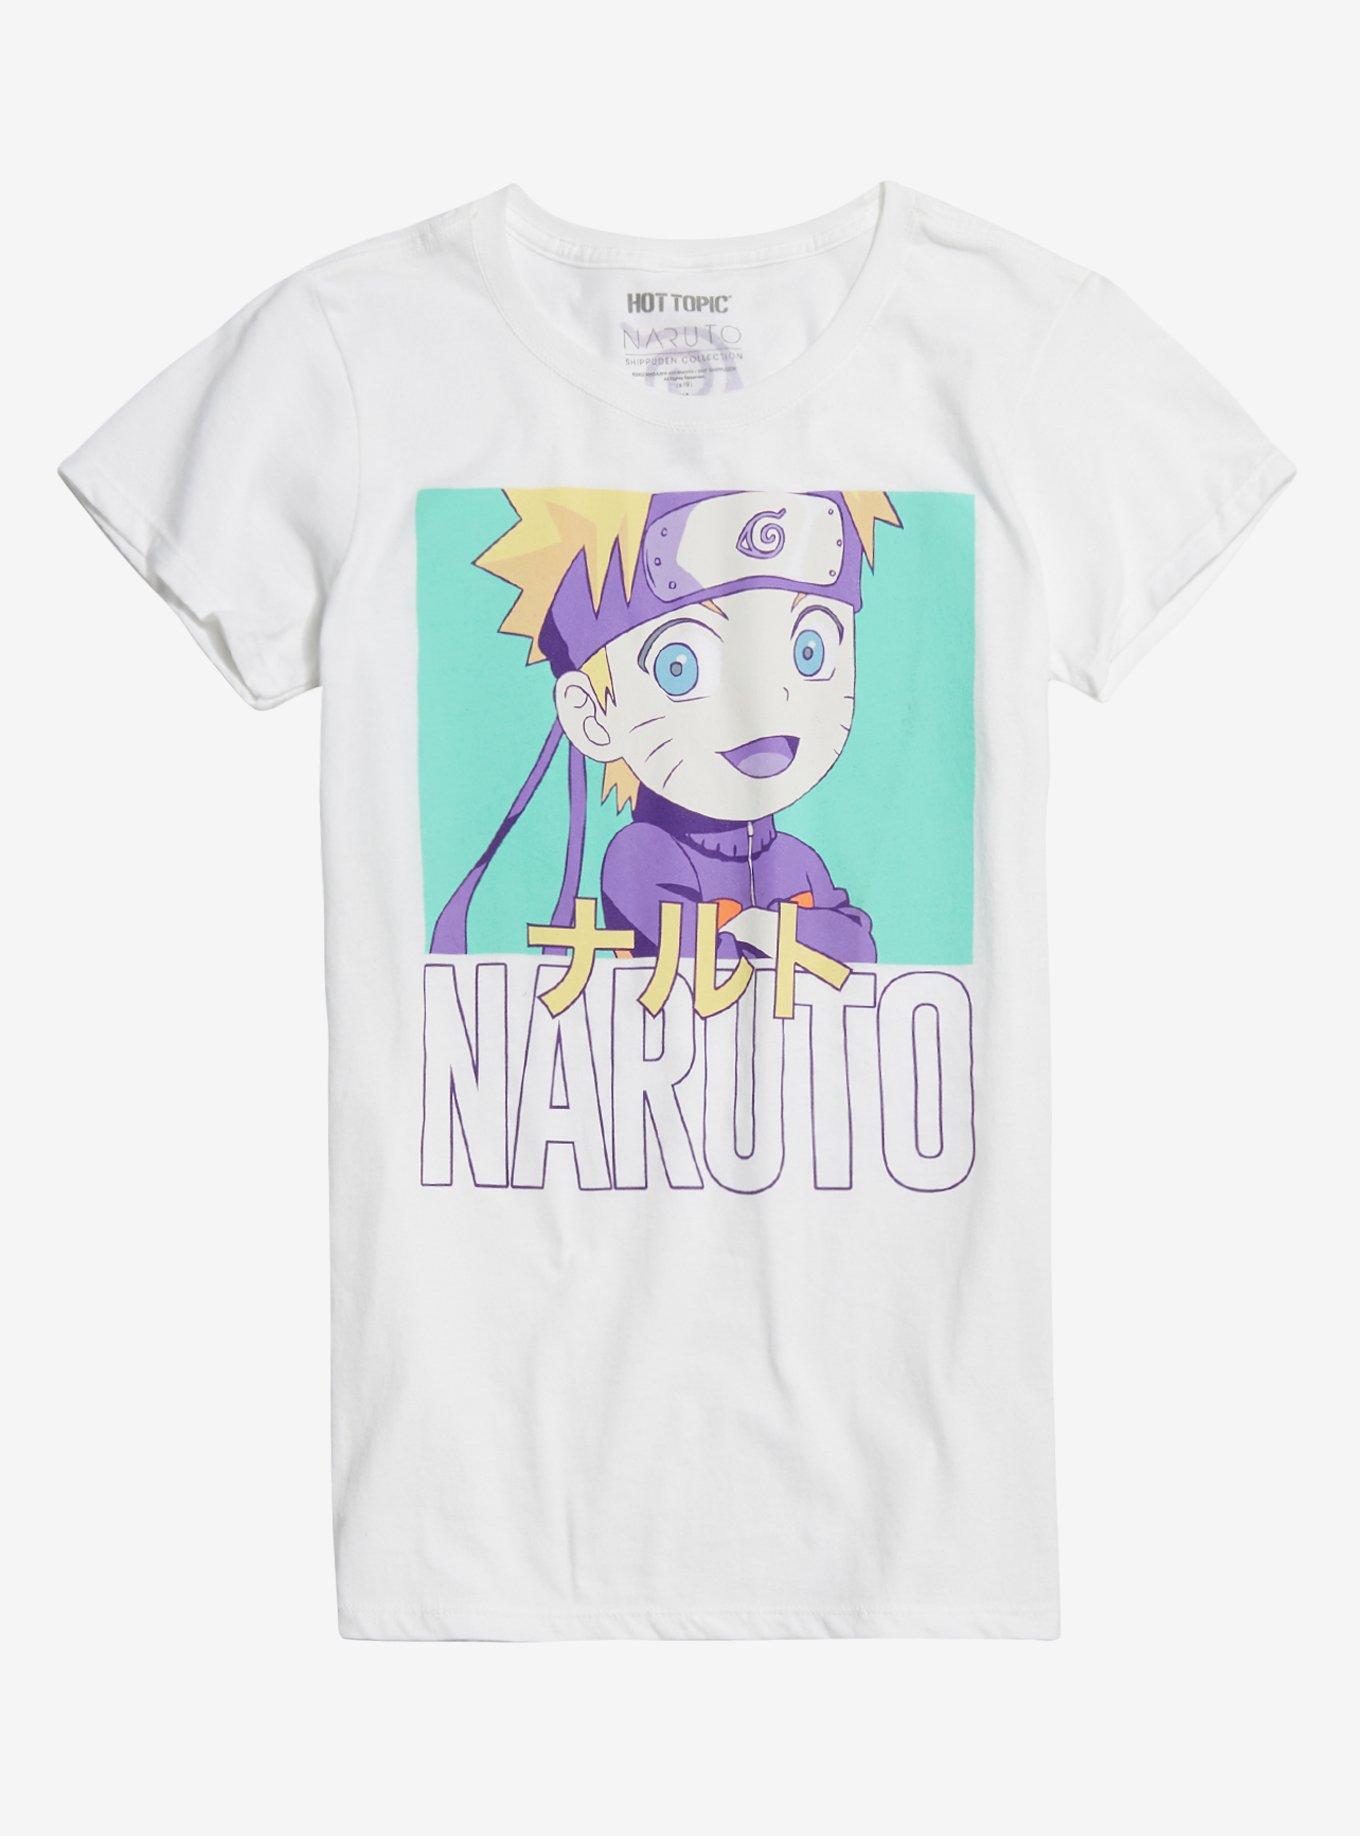 Naruto Shippuden Chibi Naruto Girls T-Shirt | Hot Topic